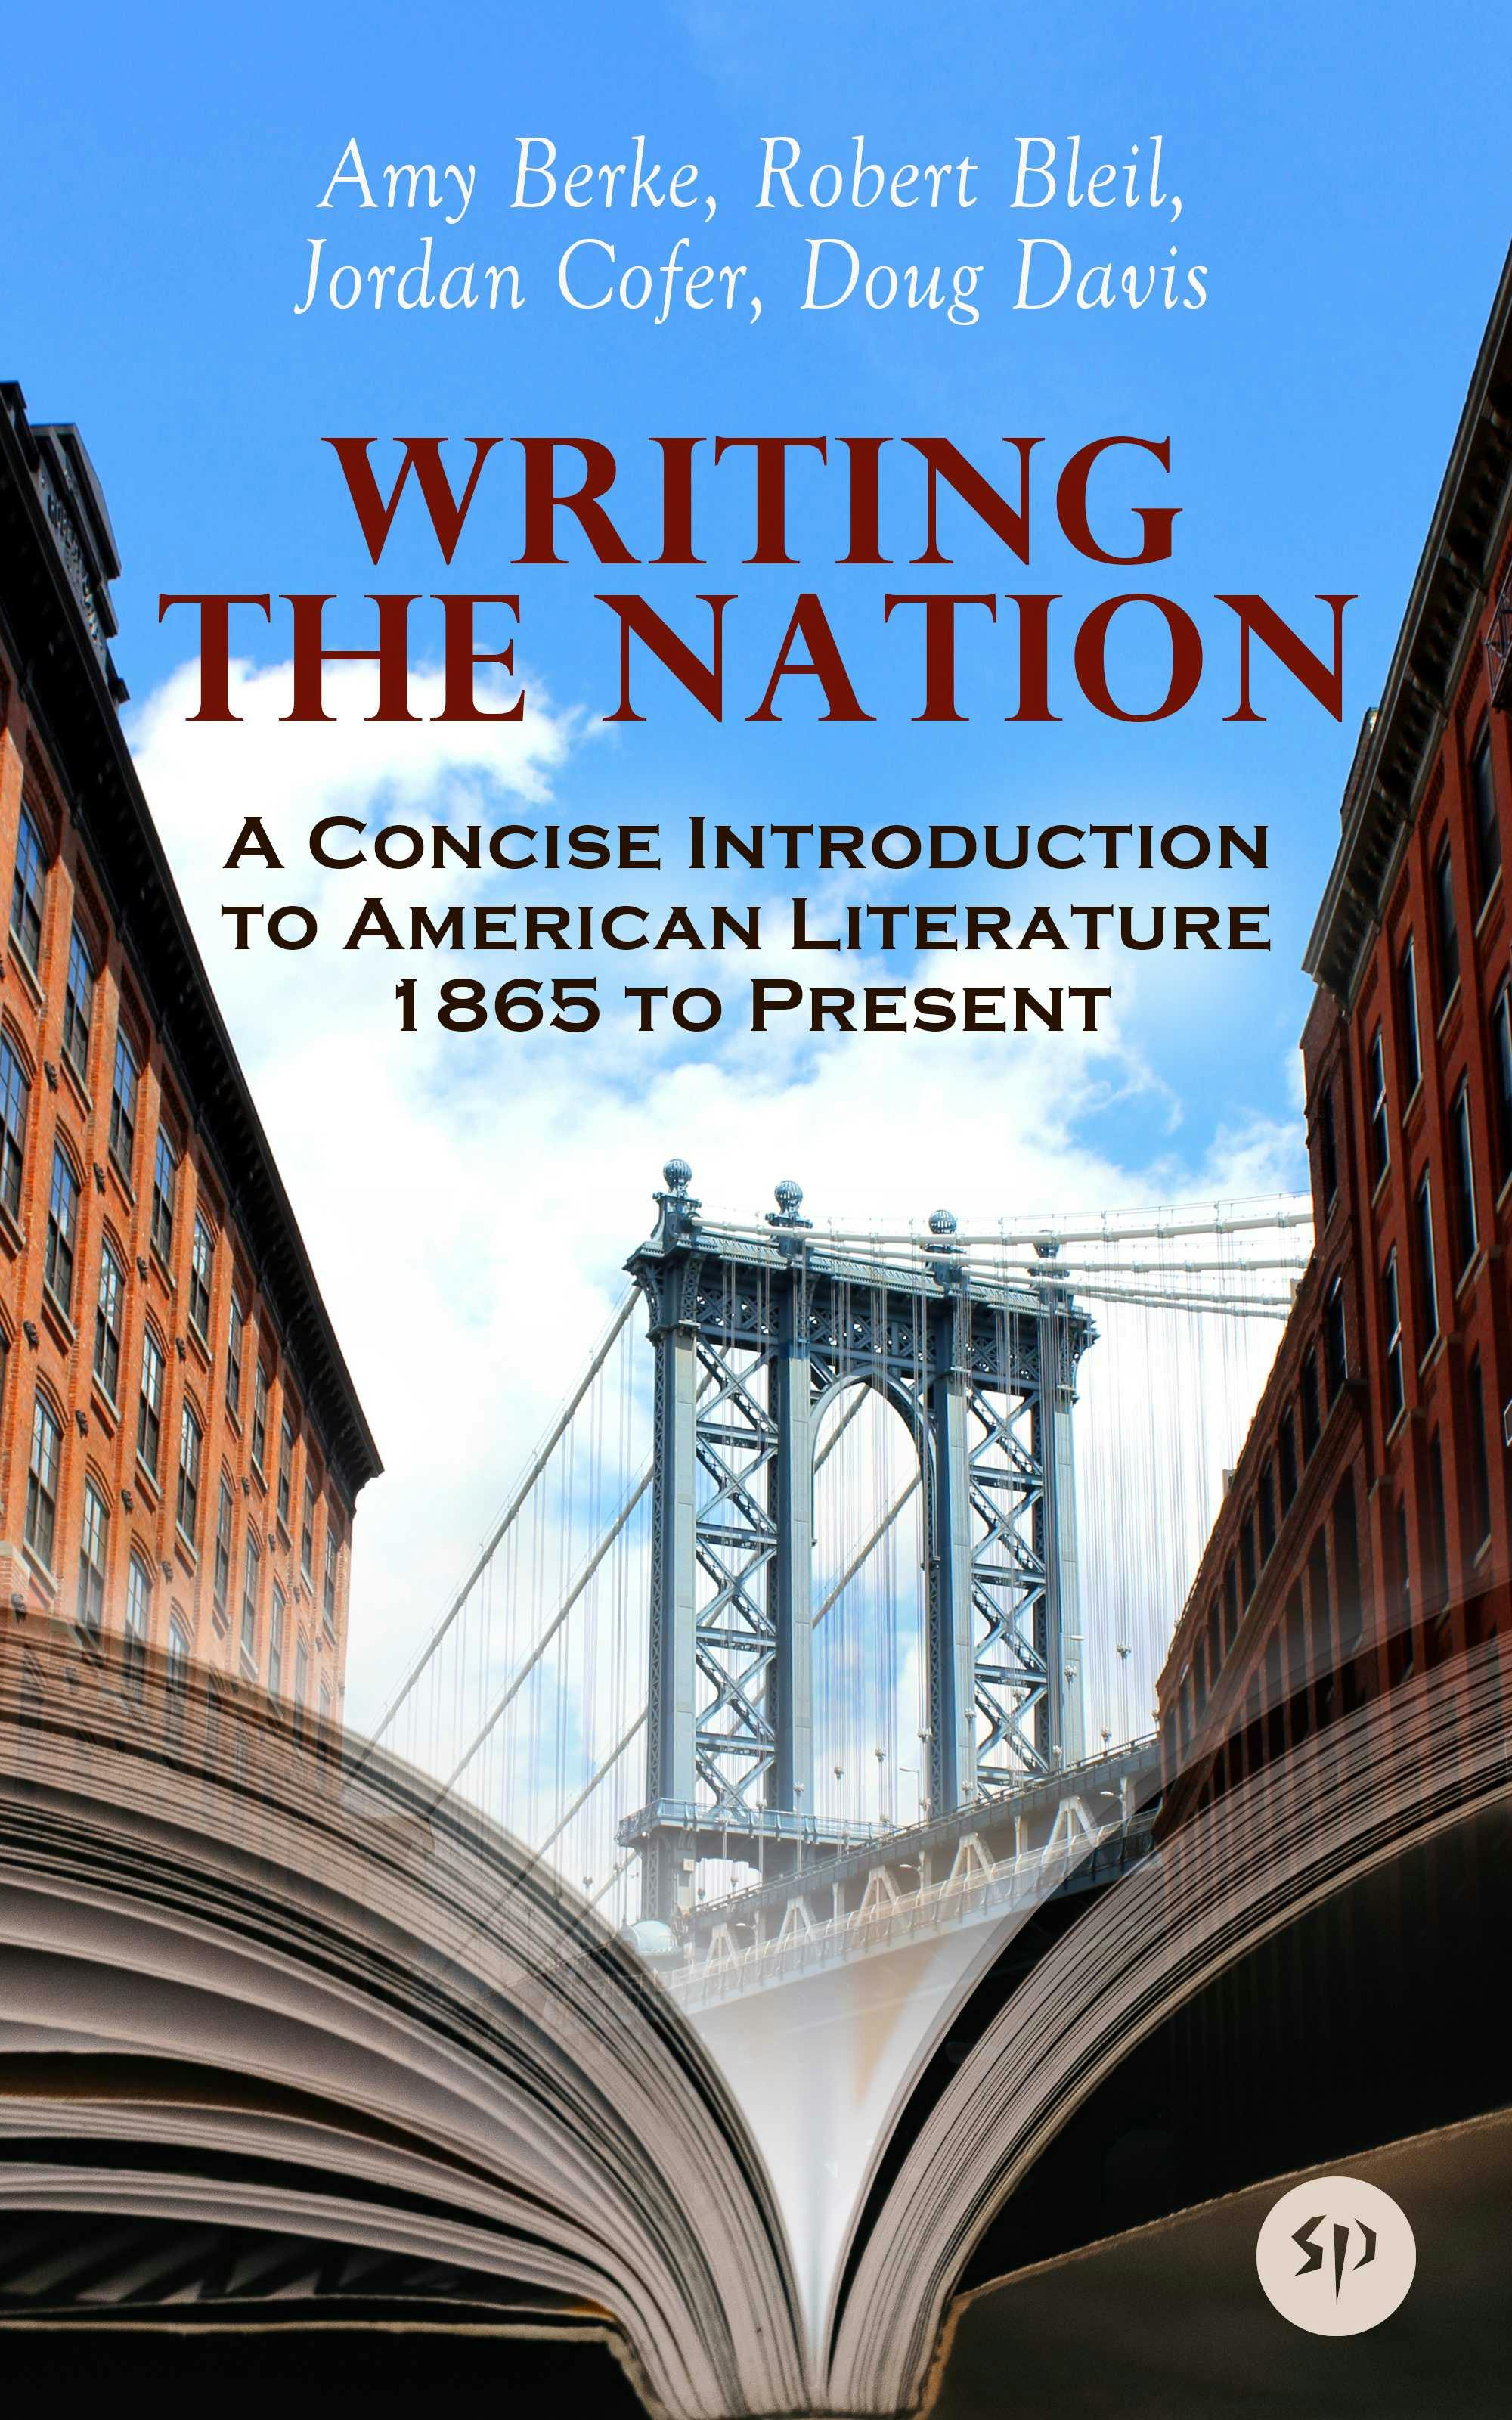 Writing the Nation: A Concise Introduction to American Literature 1865 to Present - Doug Davis, Robert Bleil, Amy Berke, Jordan Cofer